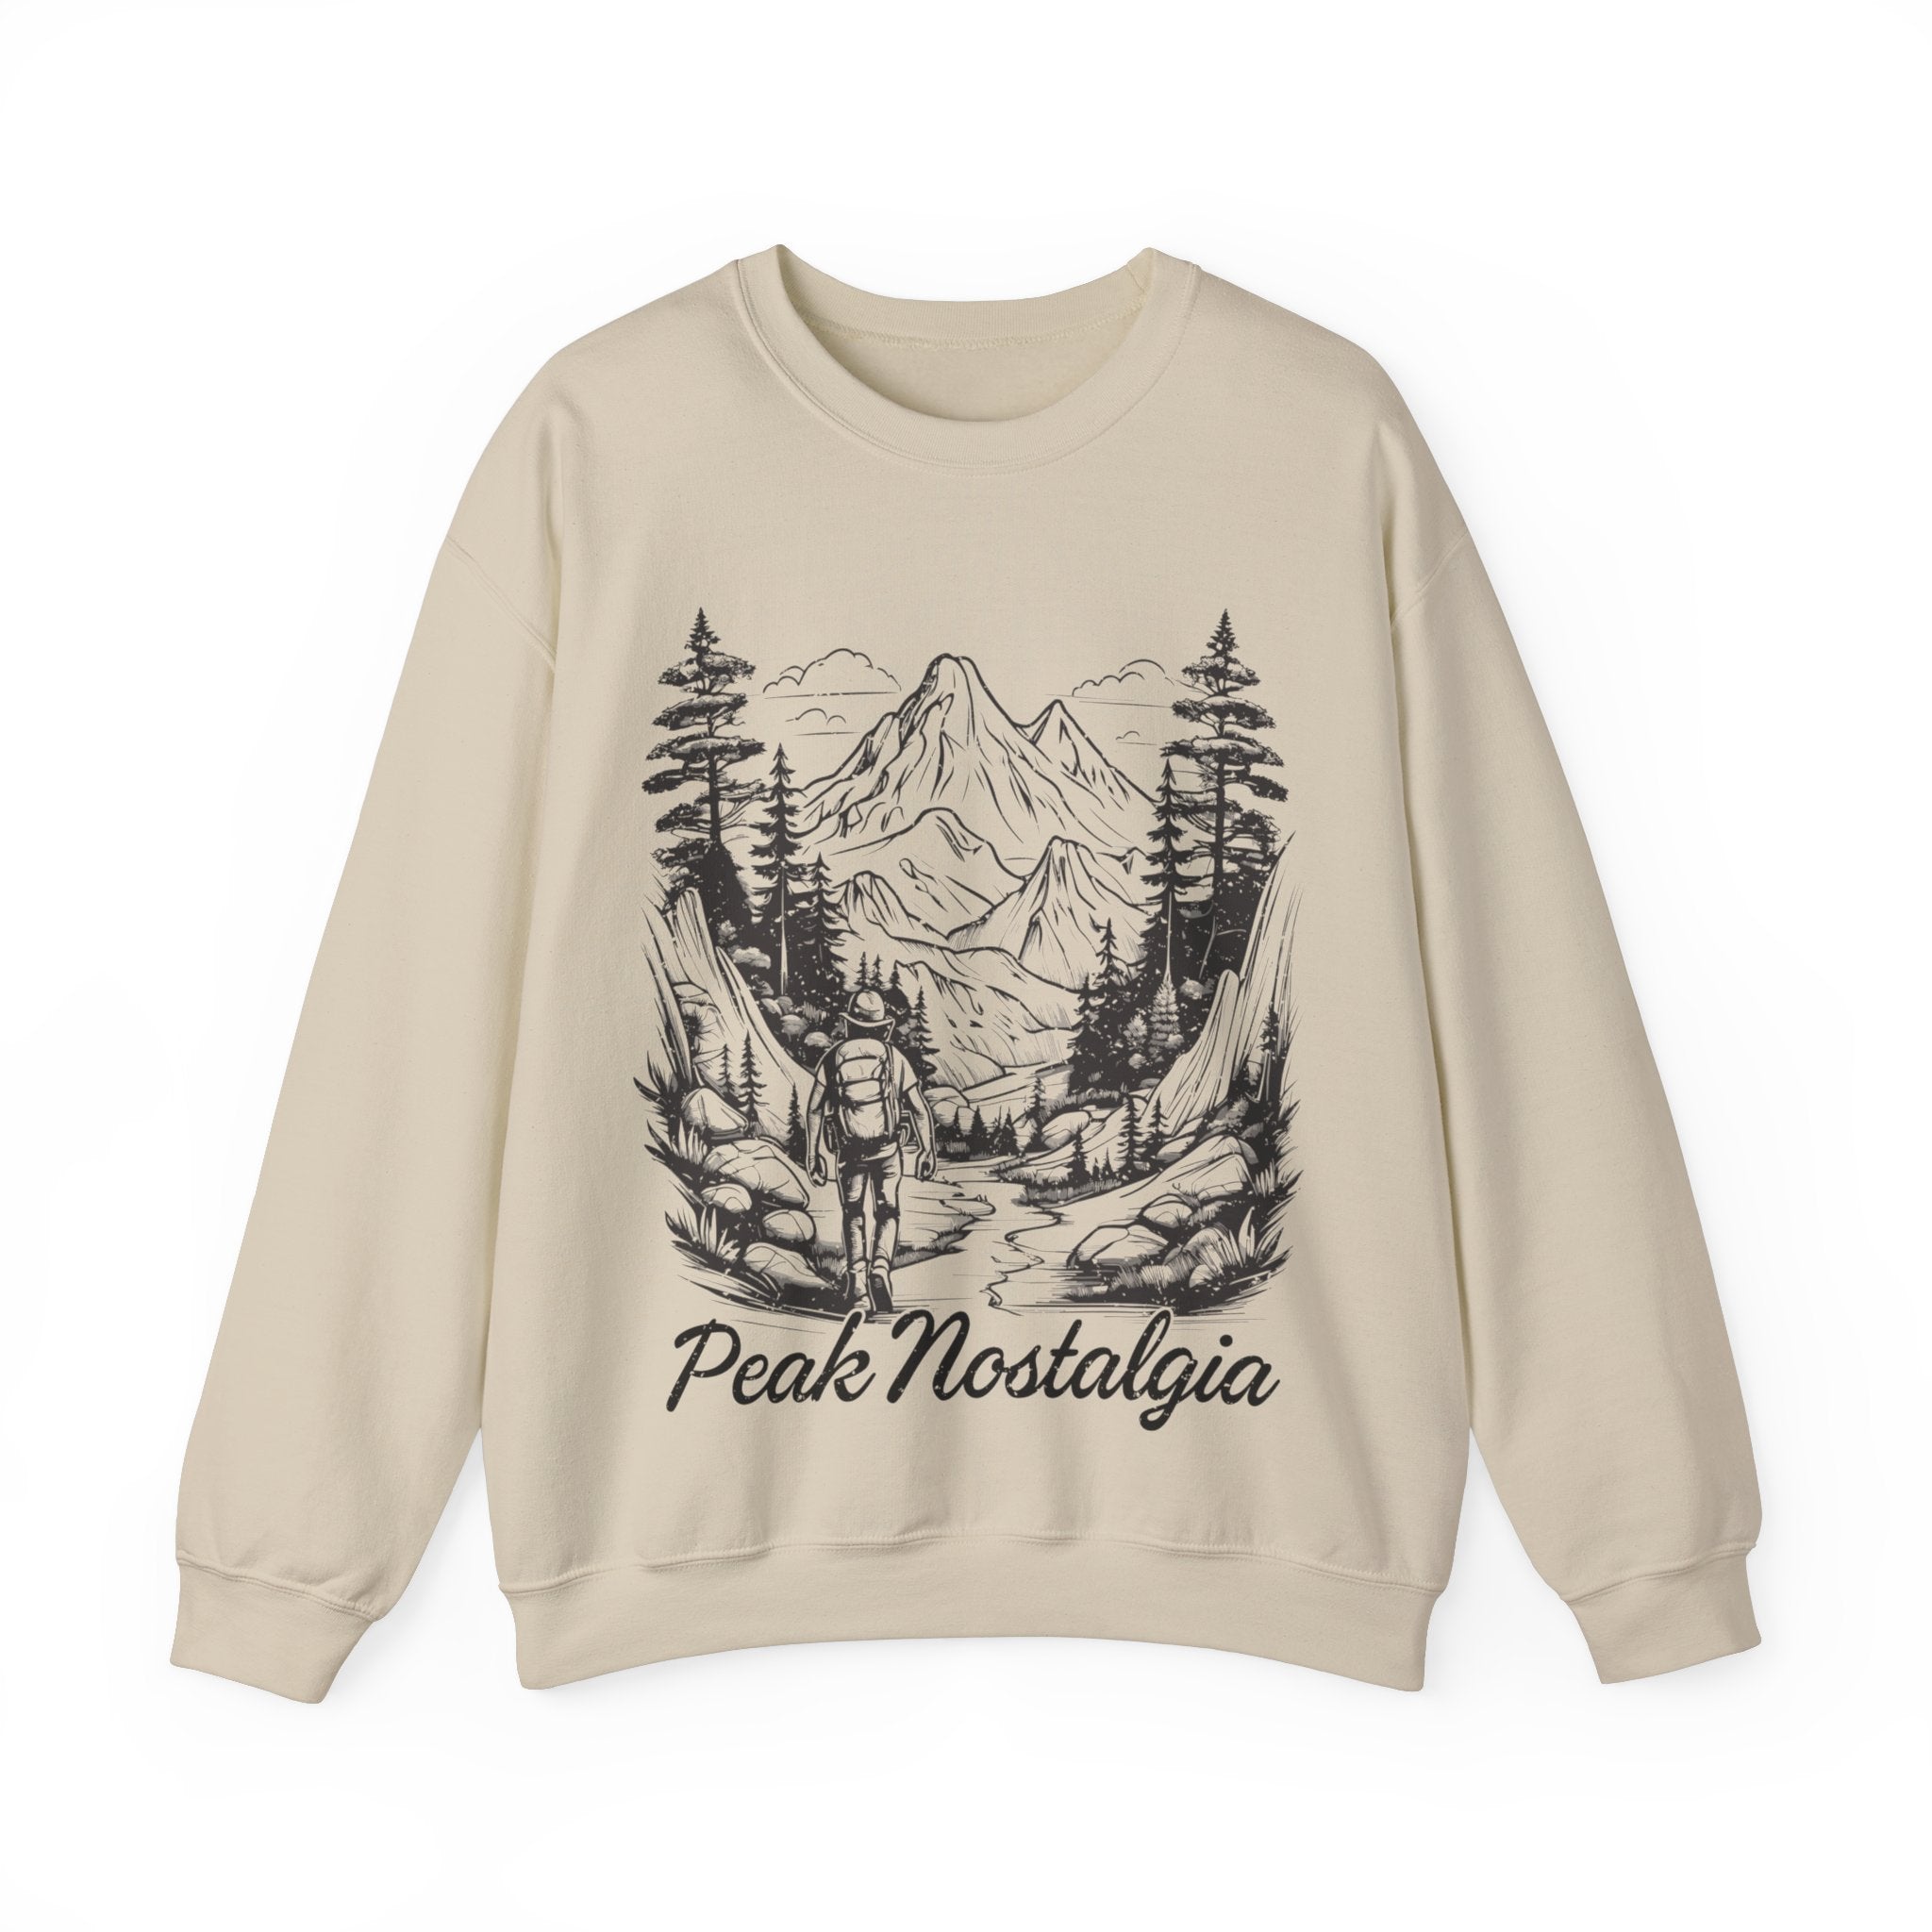 Women's "Peak Nostalgia" Vintage Sweatshirt